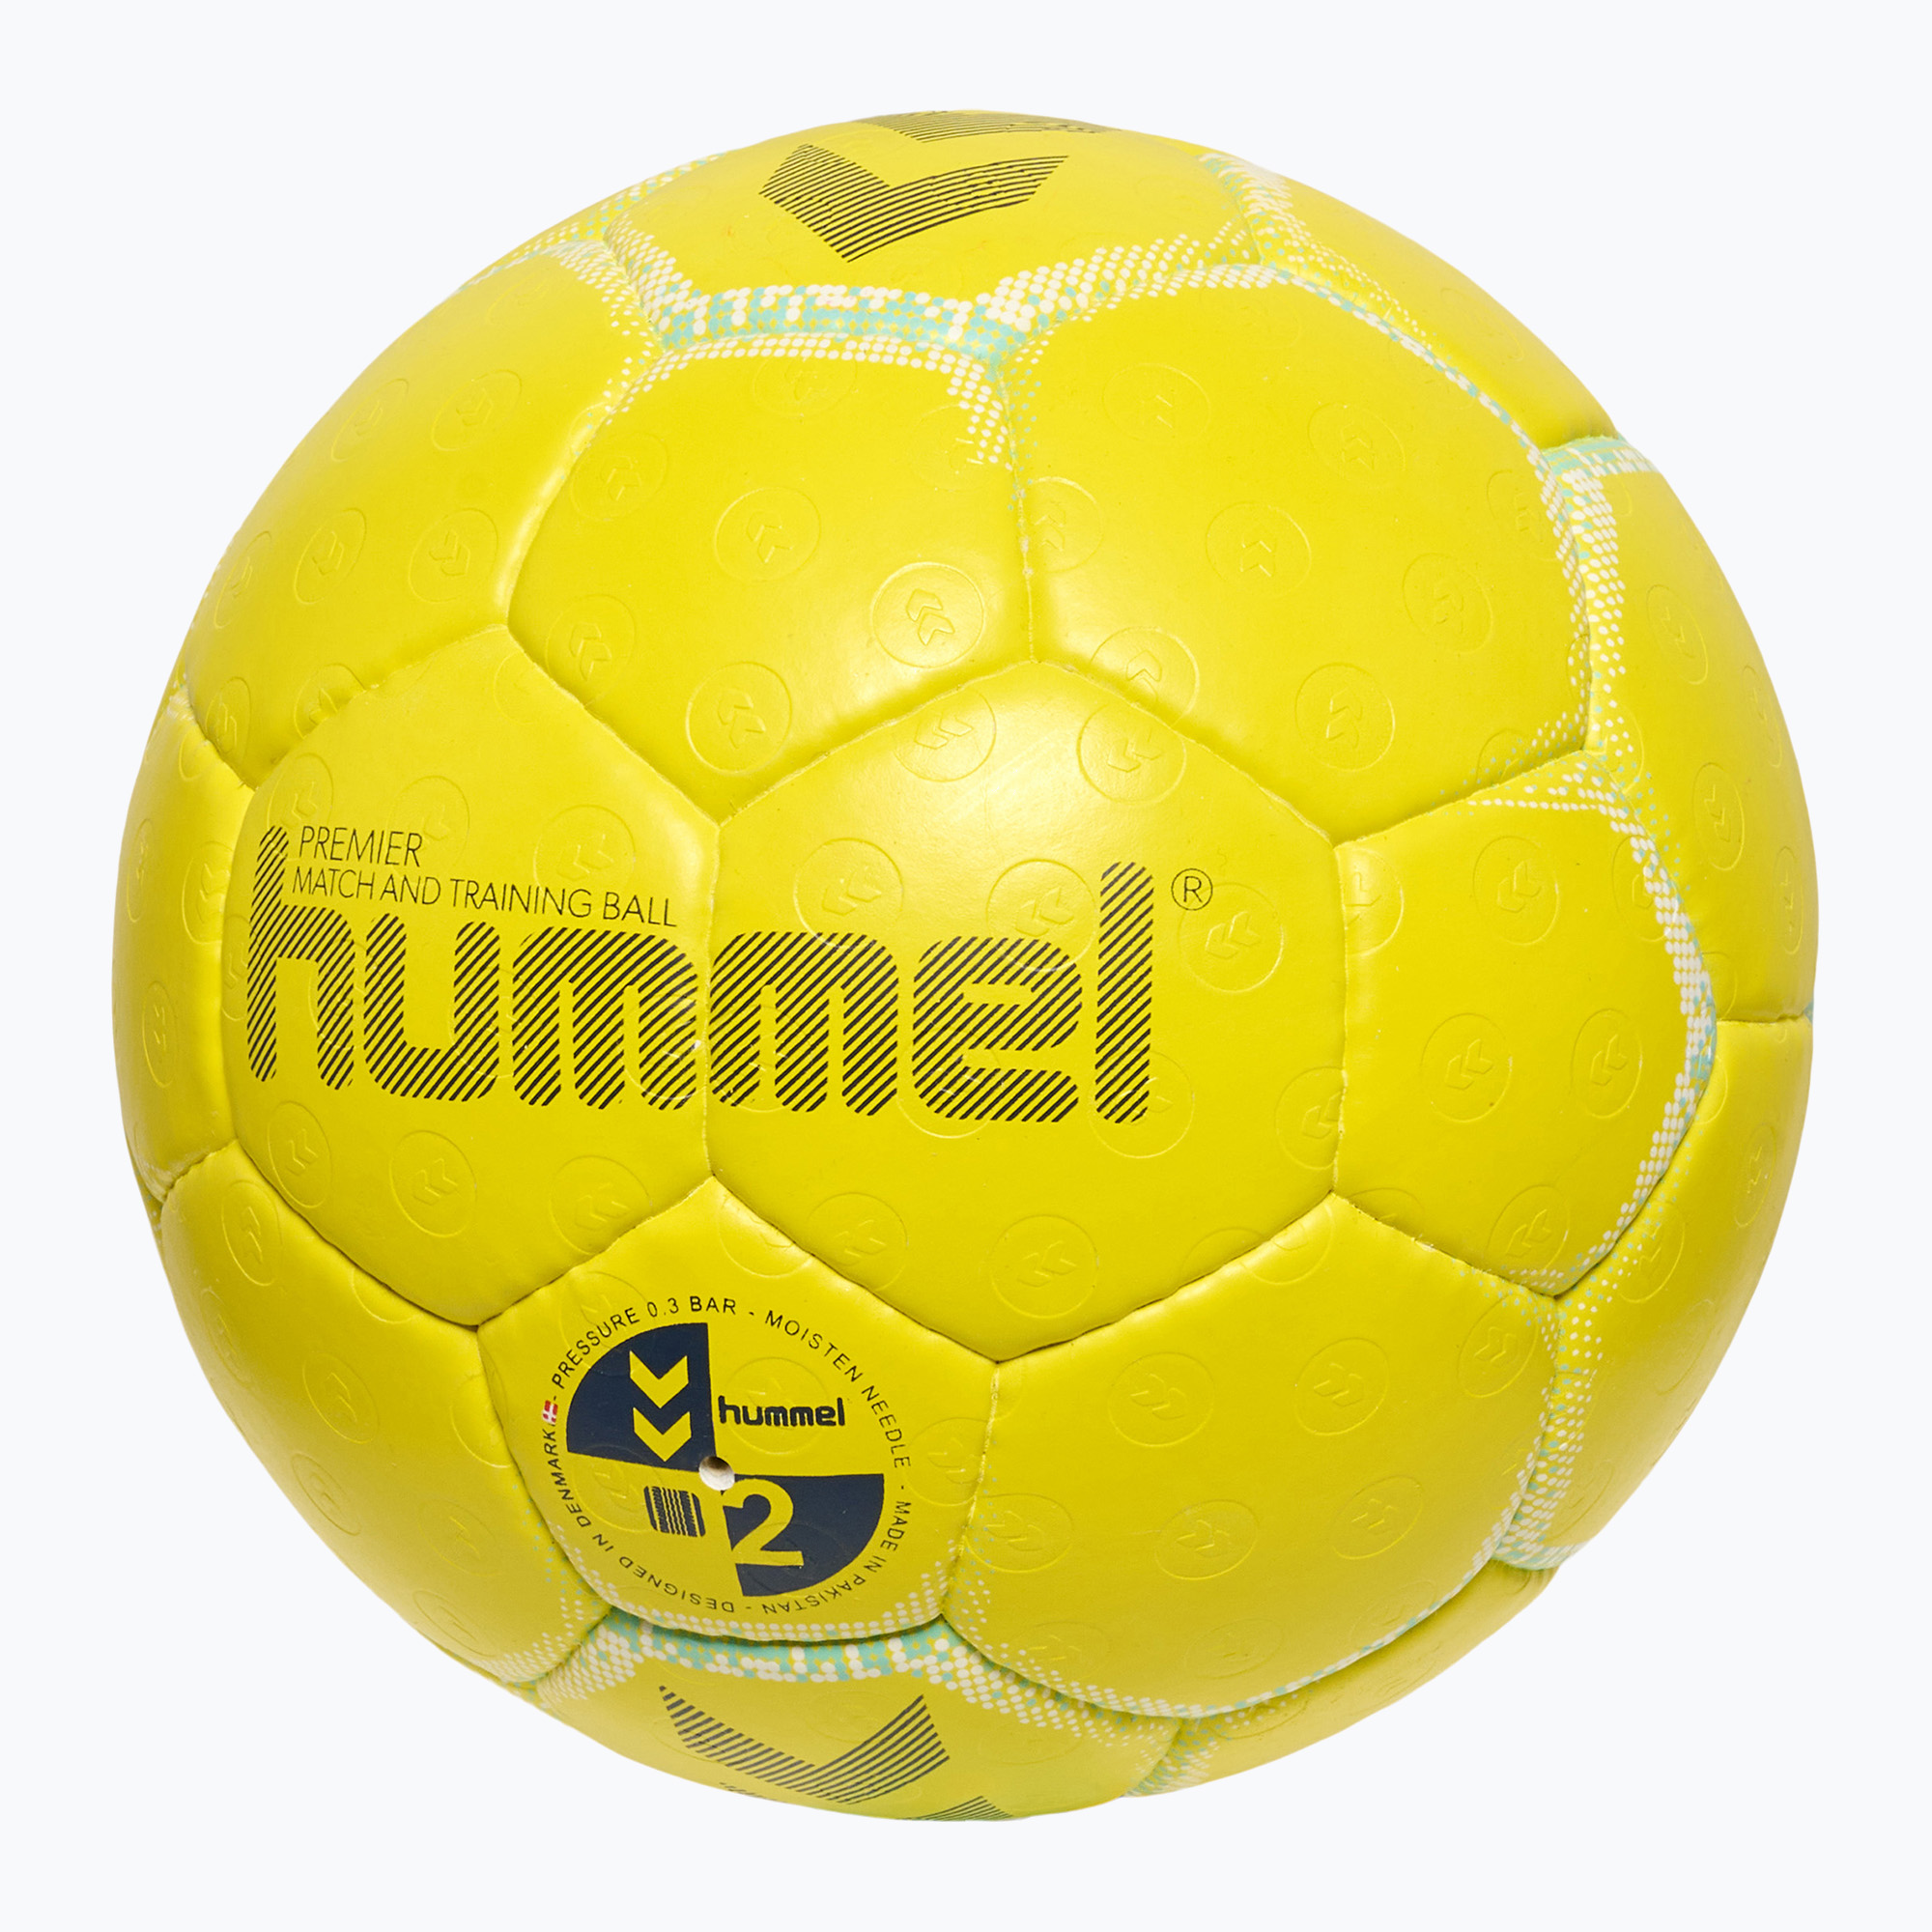 Hummel Premier HB handball yellow/white/blue size 2